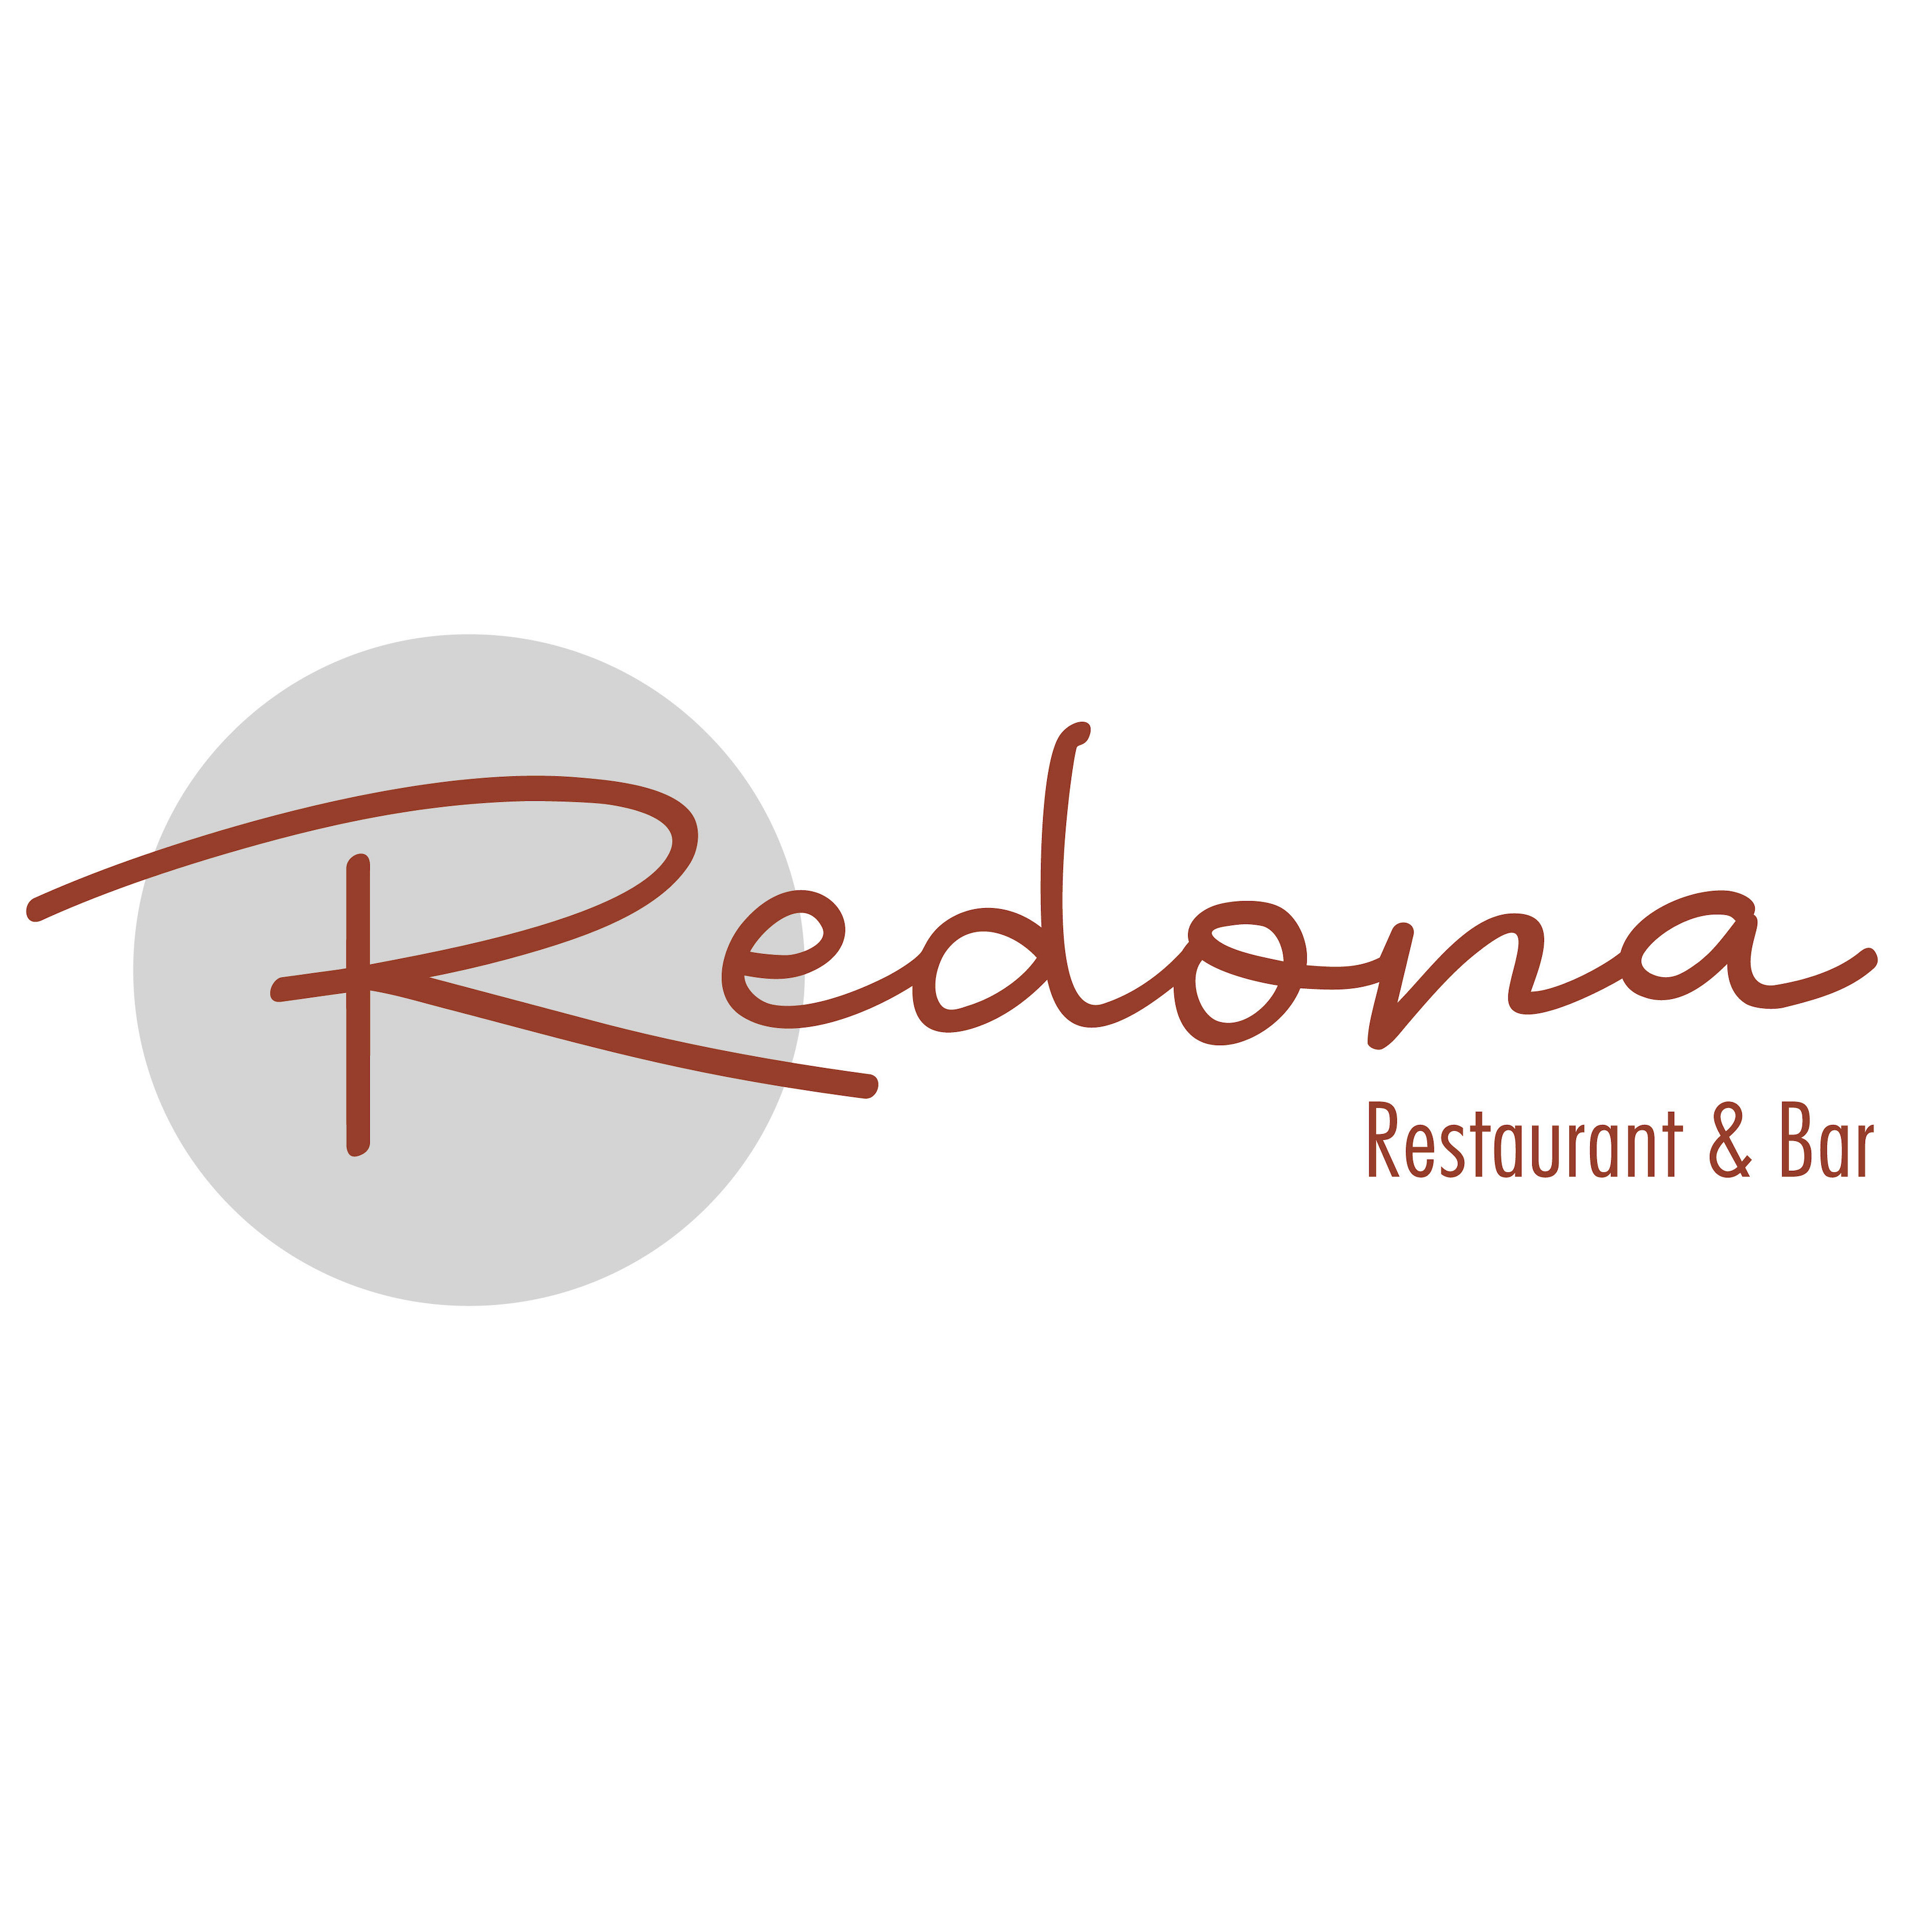 Redona - Restaurant & Bar Logo